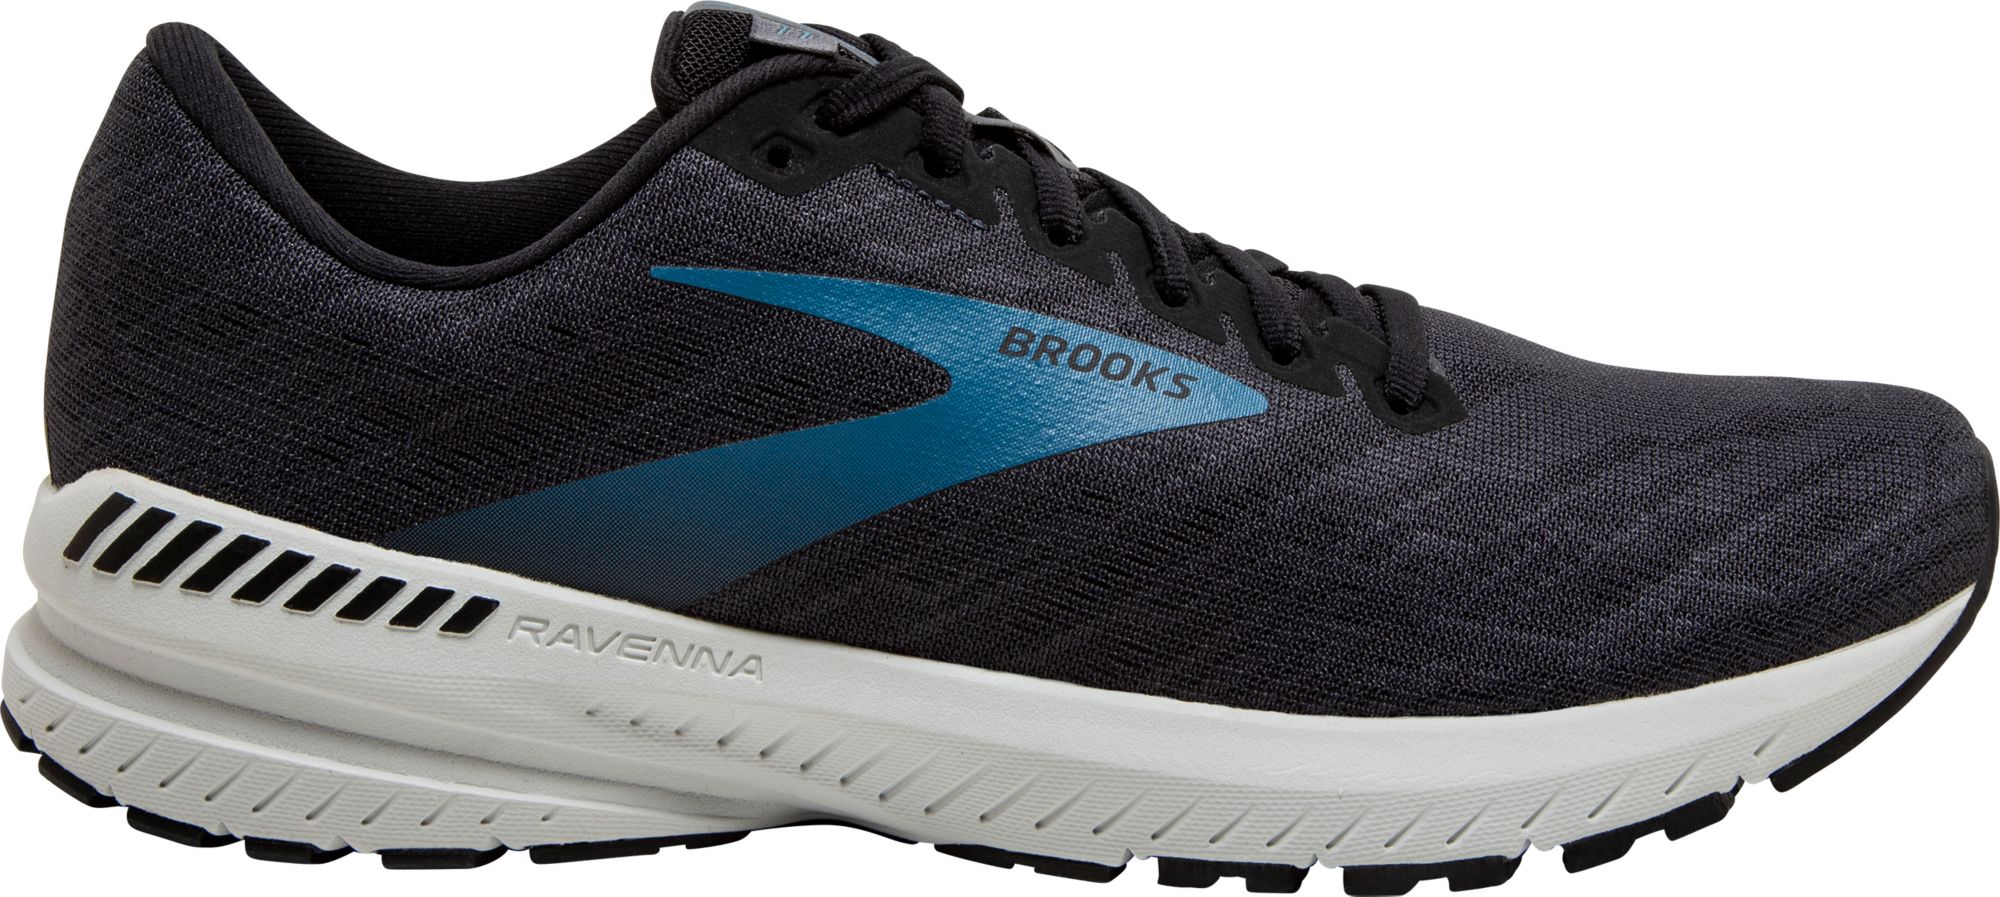 brooks men's ravenna 4 running shoes